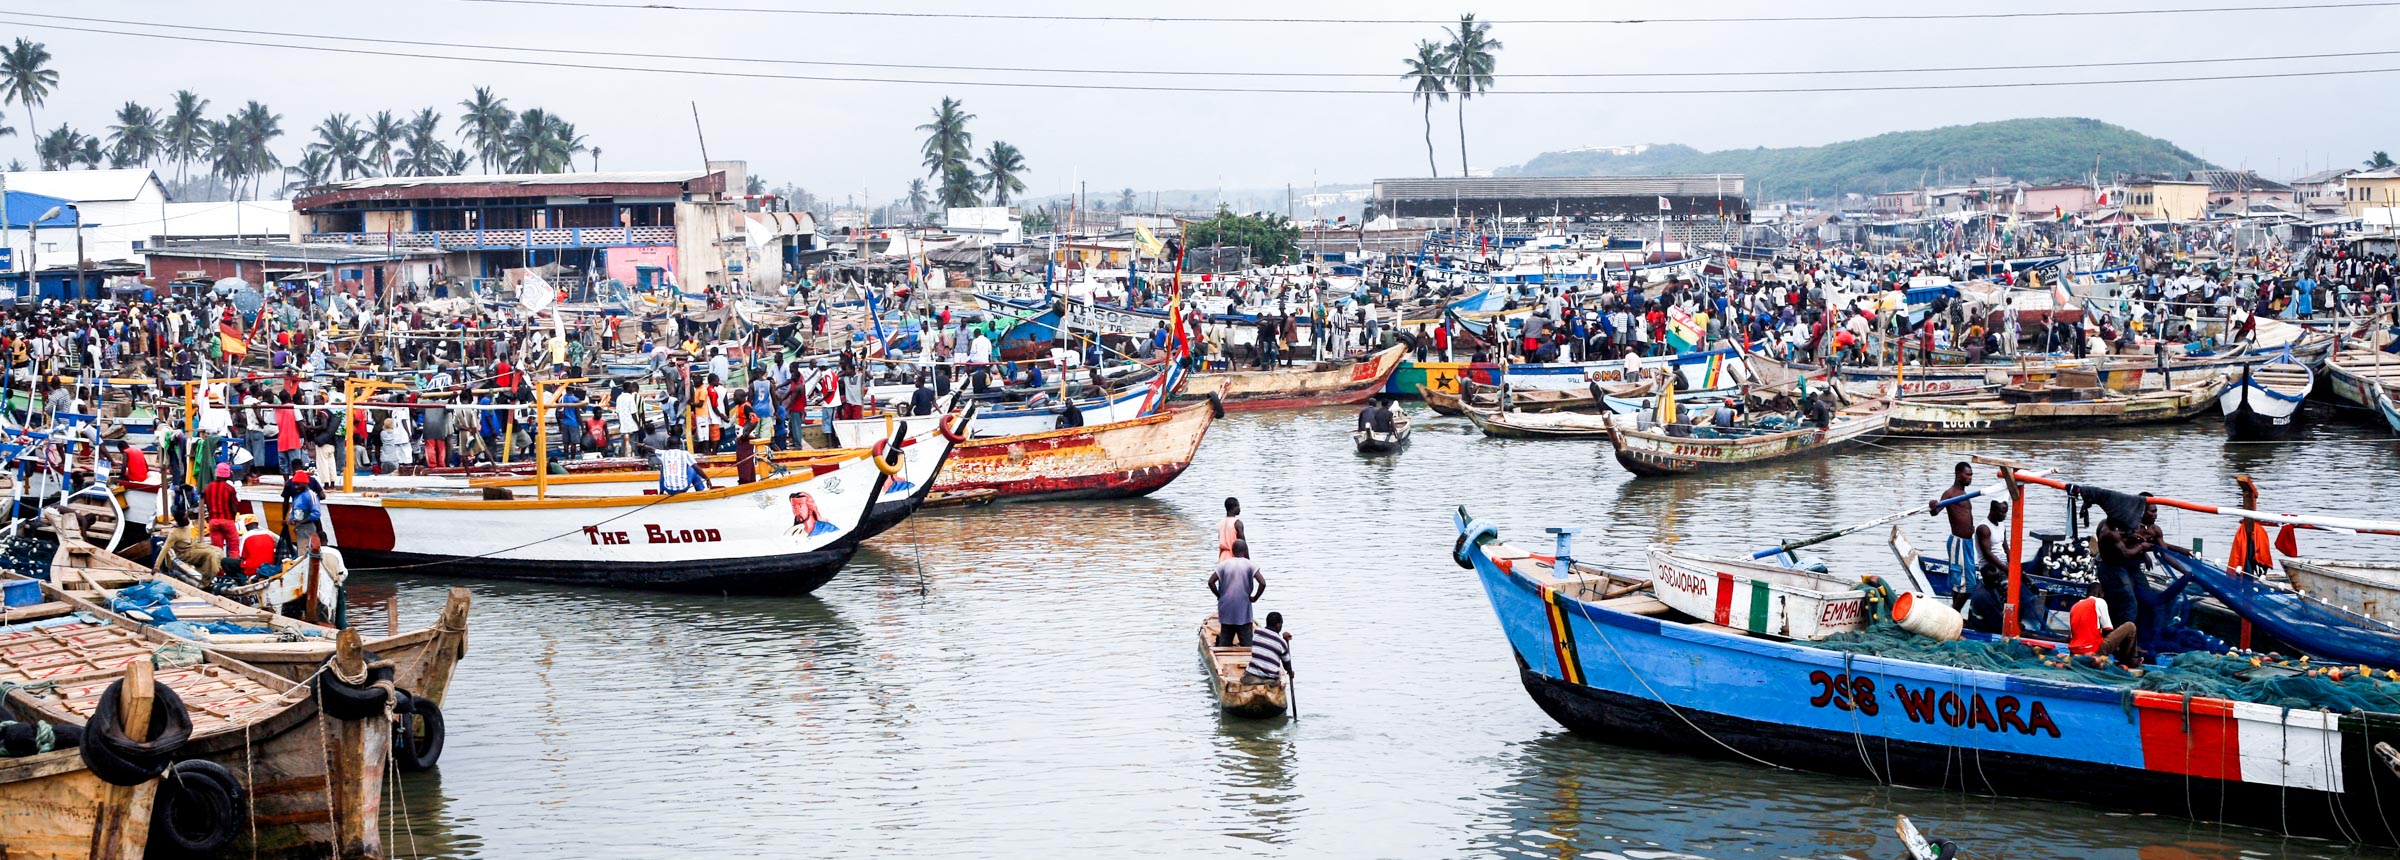 Ghana fishing boats